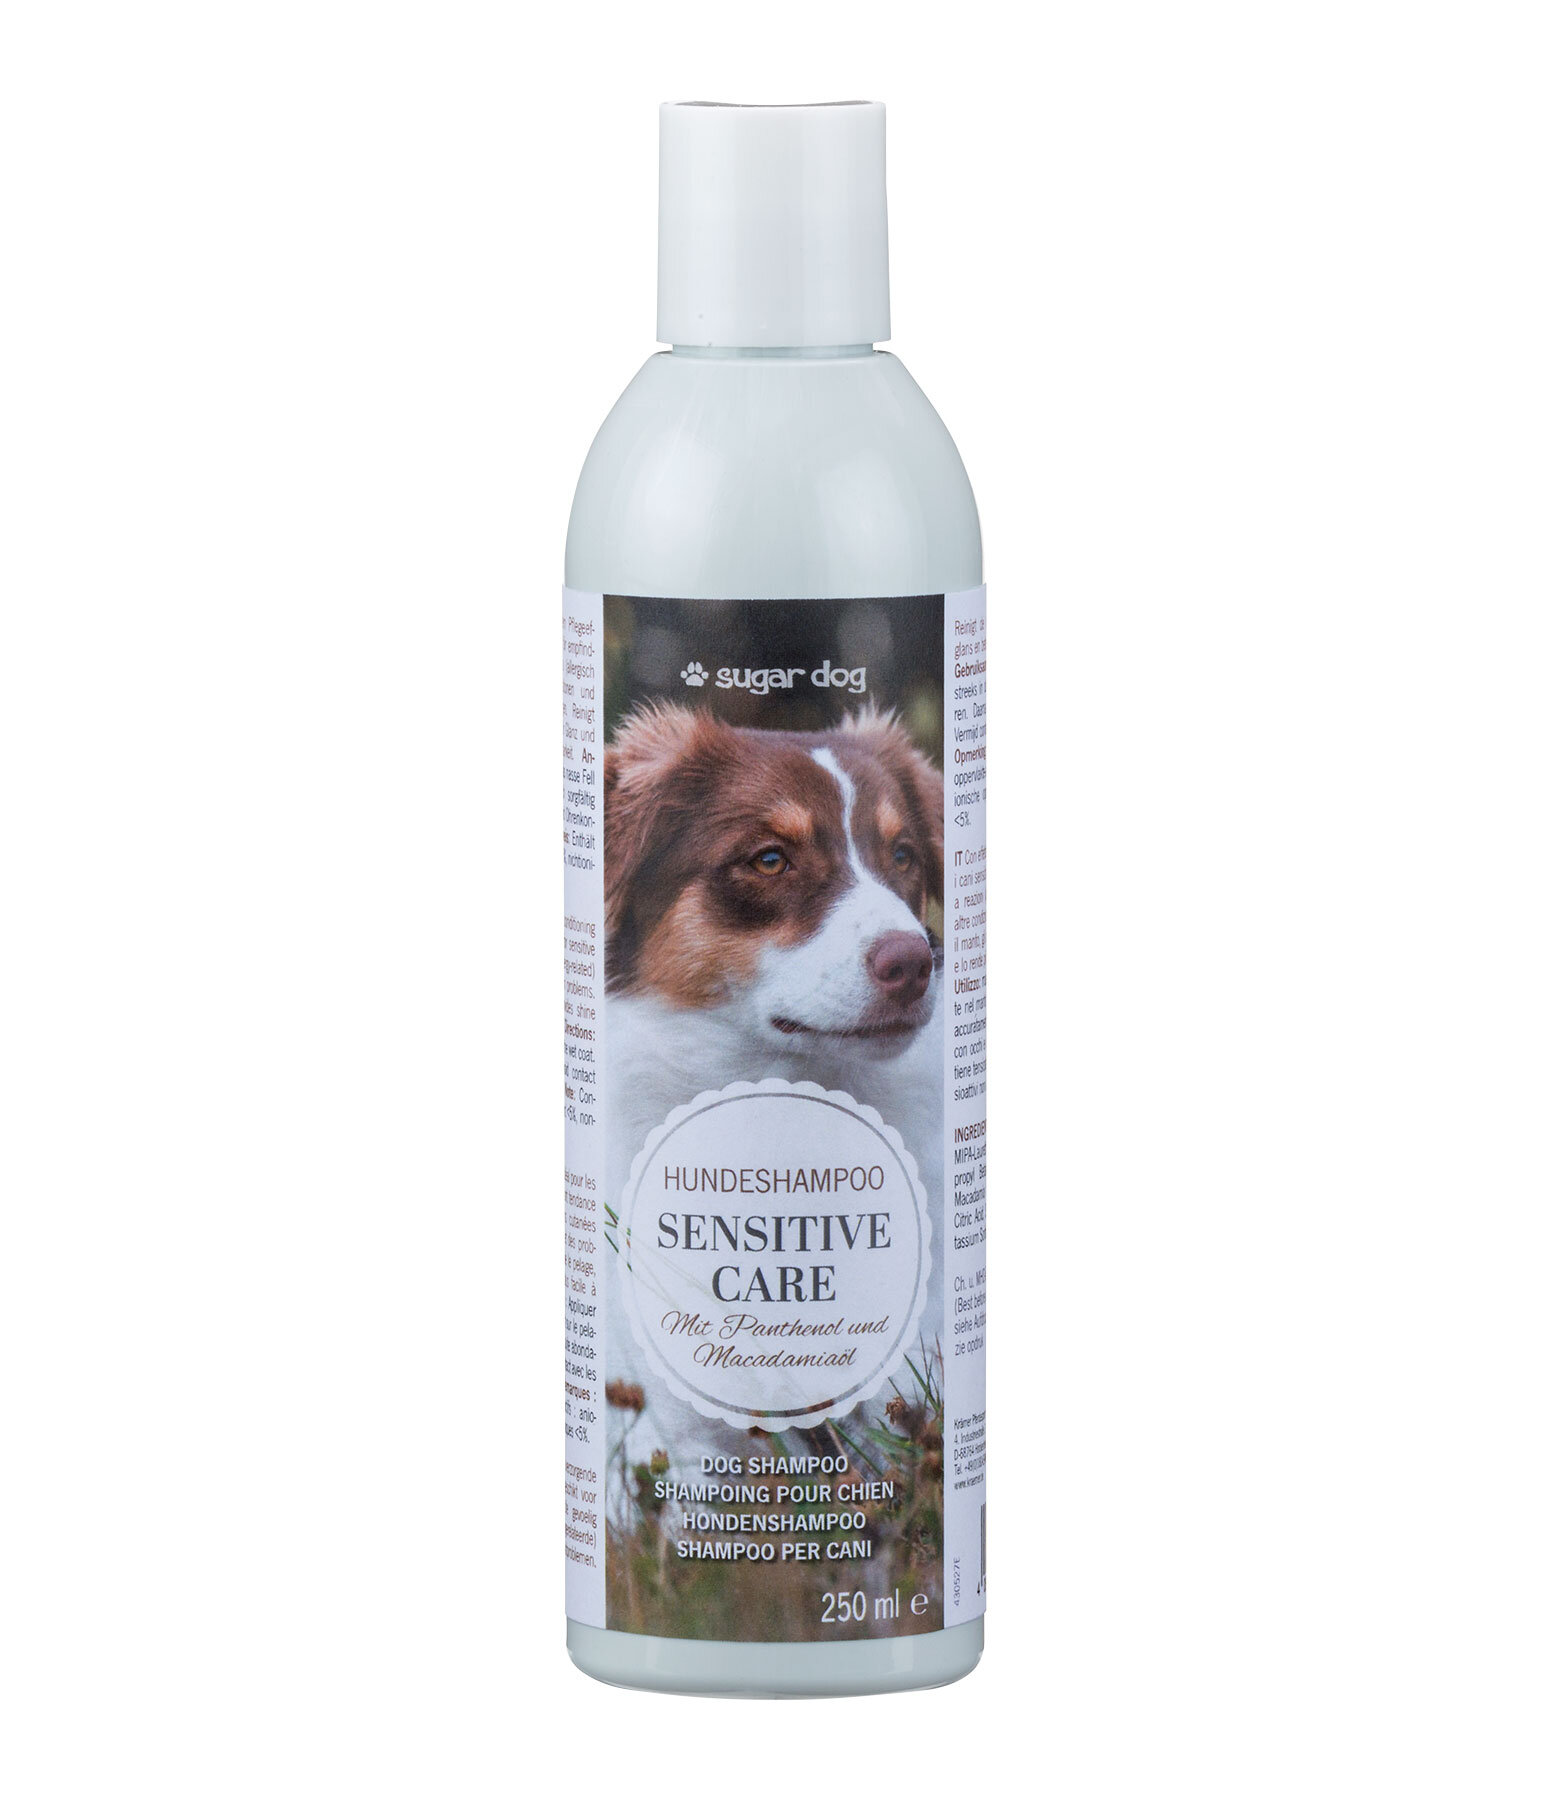 Hundeshampoo Sensitive Care